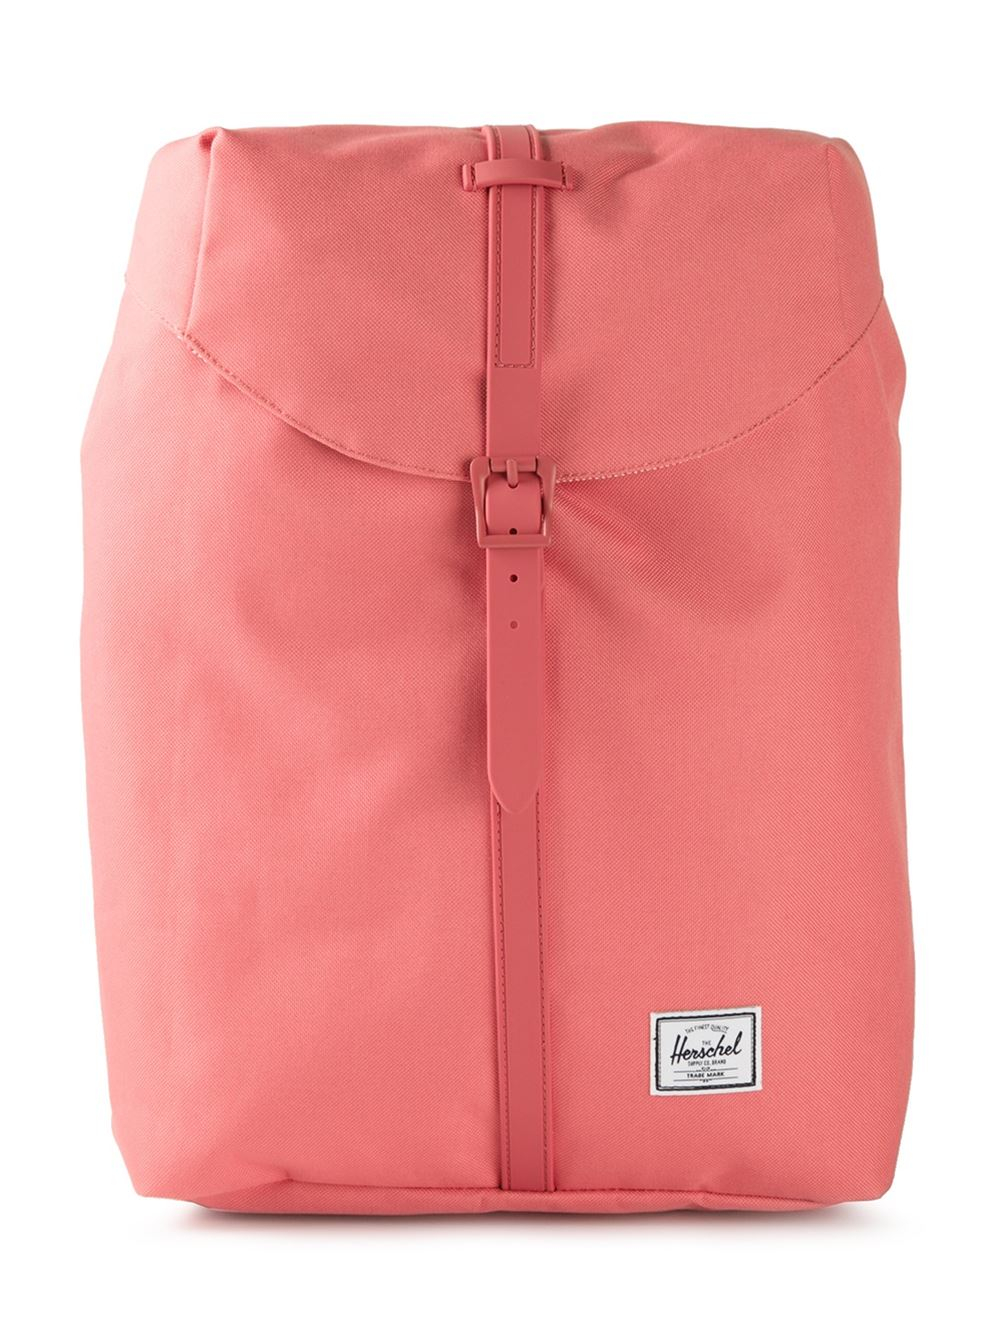 Herschel Supply Co. 'Post' Backpack in Pink - Lyst